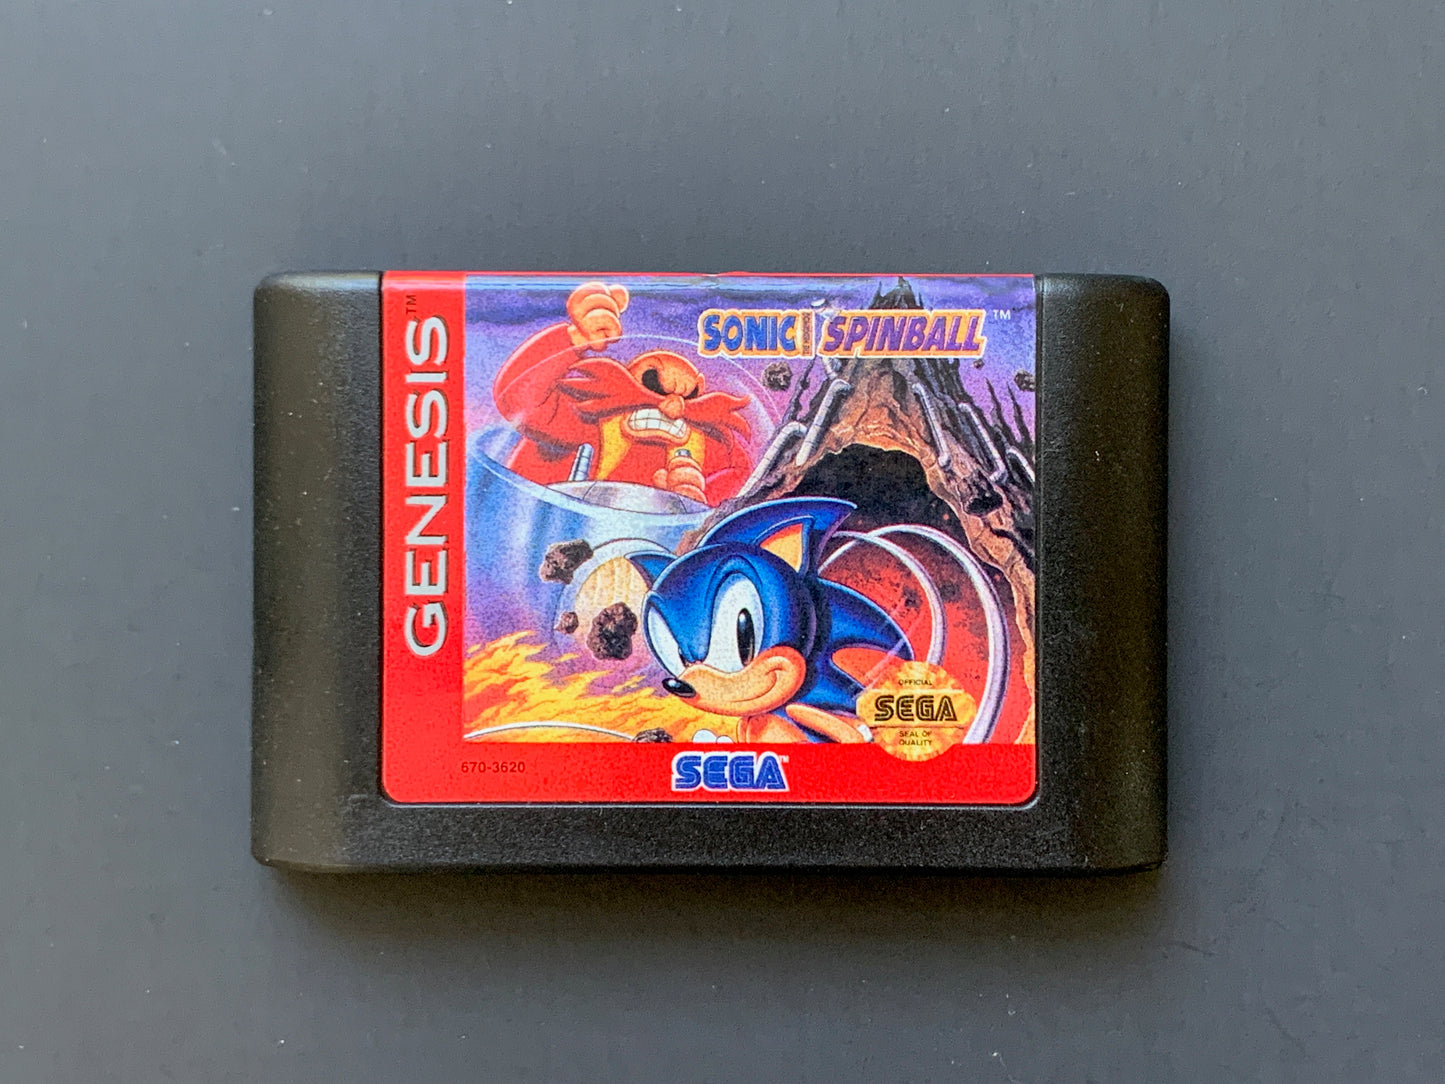 Sonic the Hedgehog Spinball • Sega Genesis